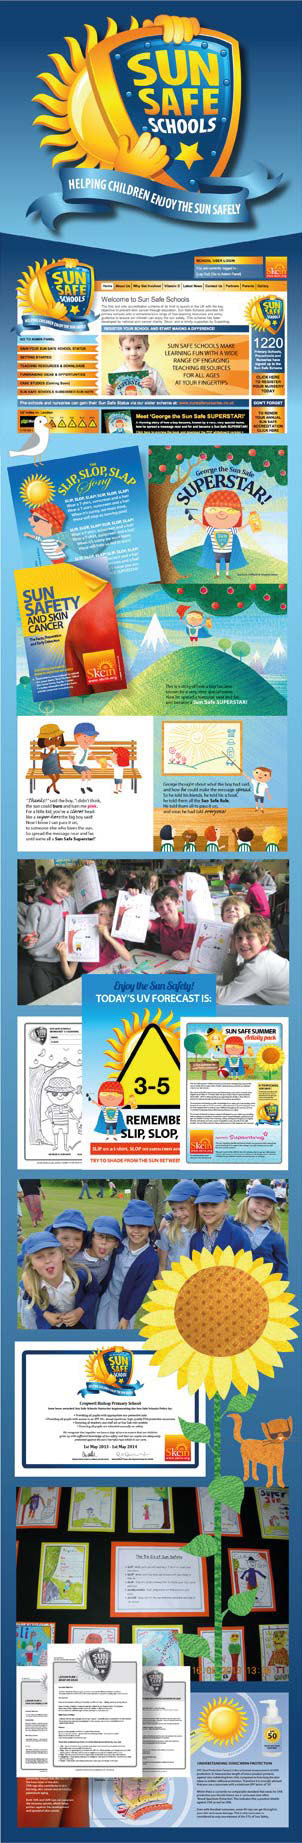 www.sunsafeschools.co.uk - free resource for UK primary schools